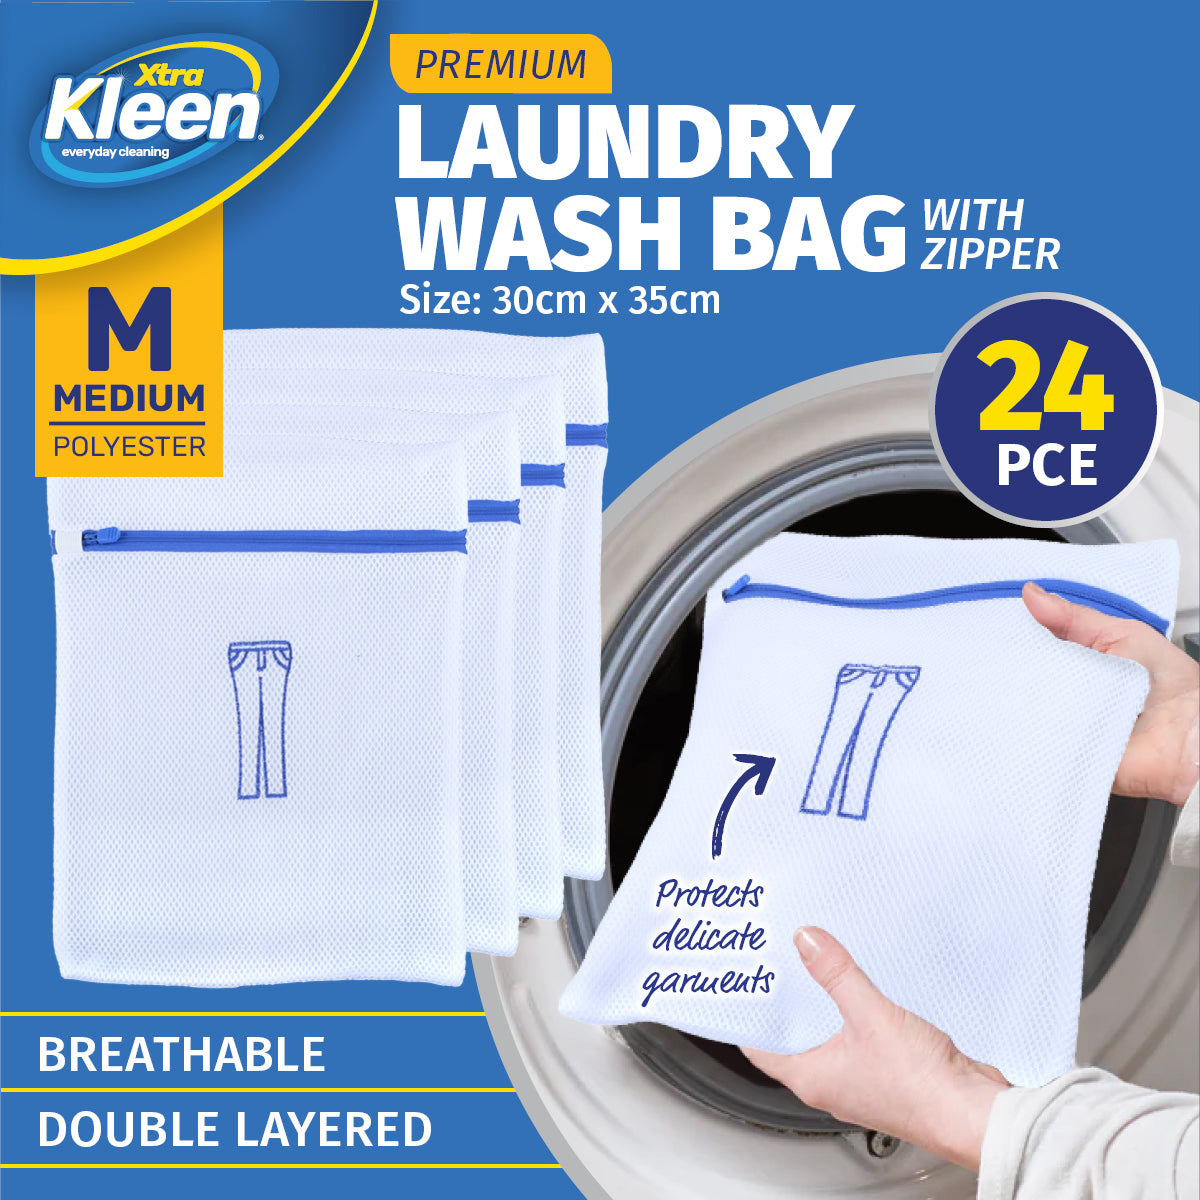 Xtra Kleen 24PCE Laundry Wash Bags Delicate Garments Size Medium 30 x 35cm